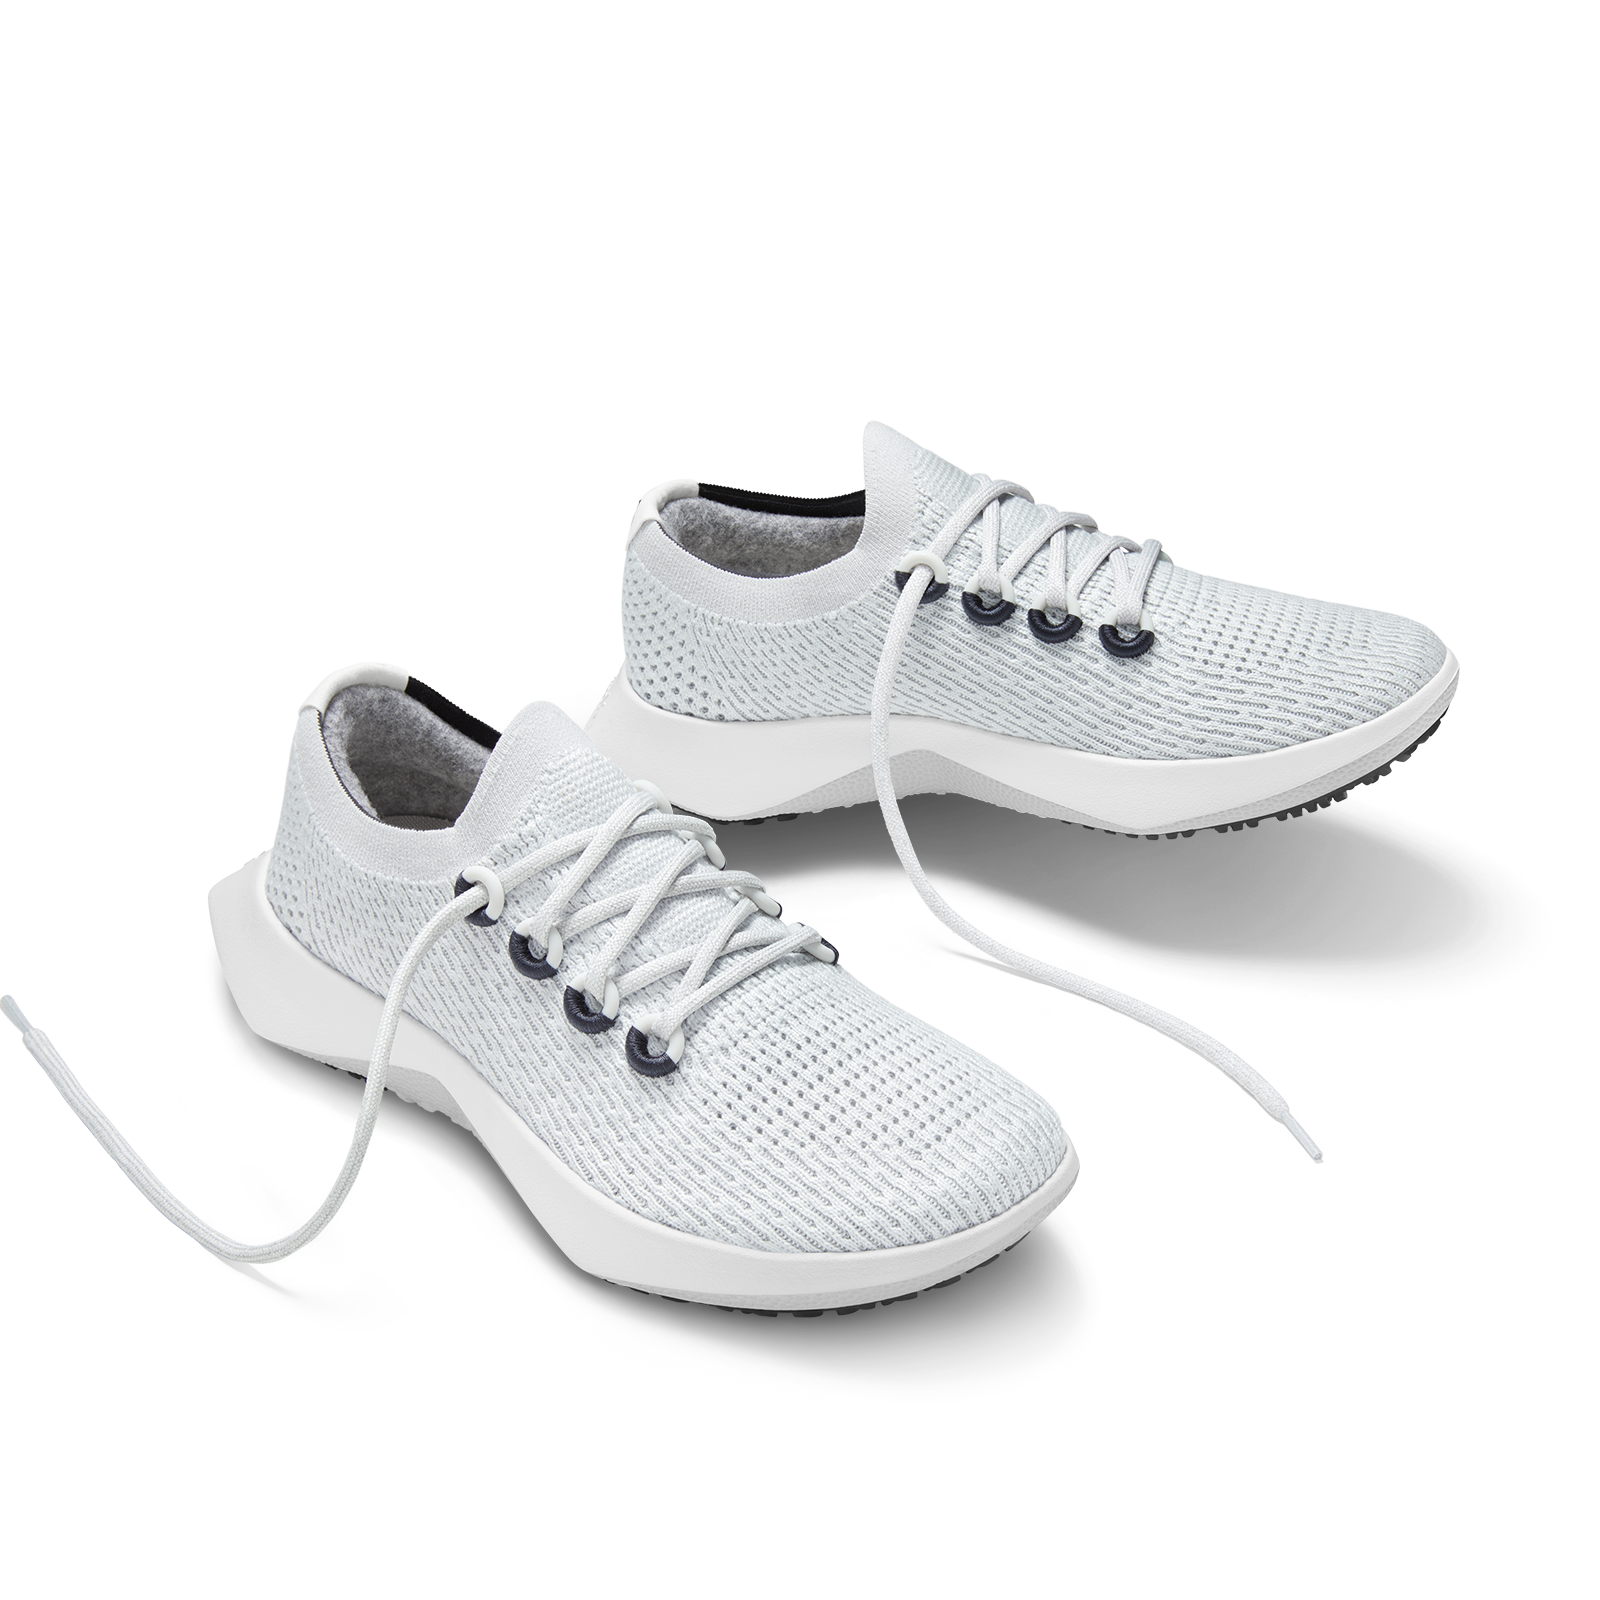 Allbirds Tree Dasher 2 TD2 Running Sneakers Women's Size 9 Blizzard White  Shoes